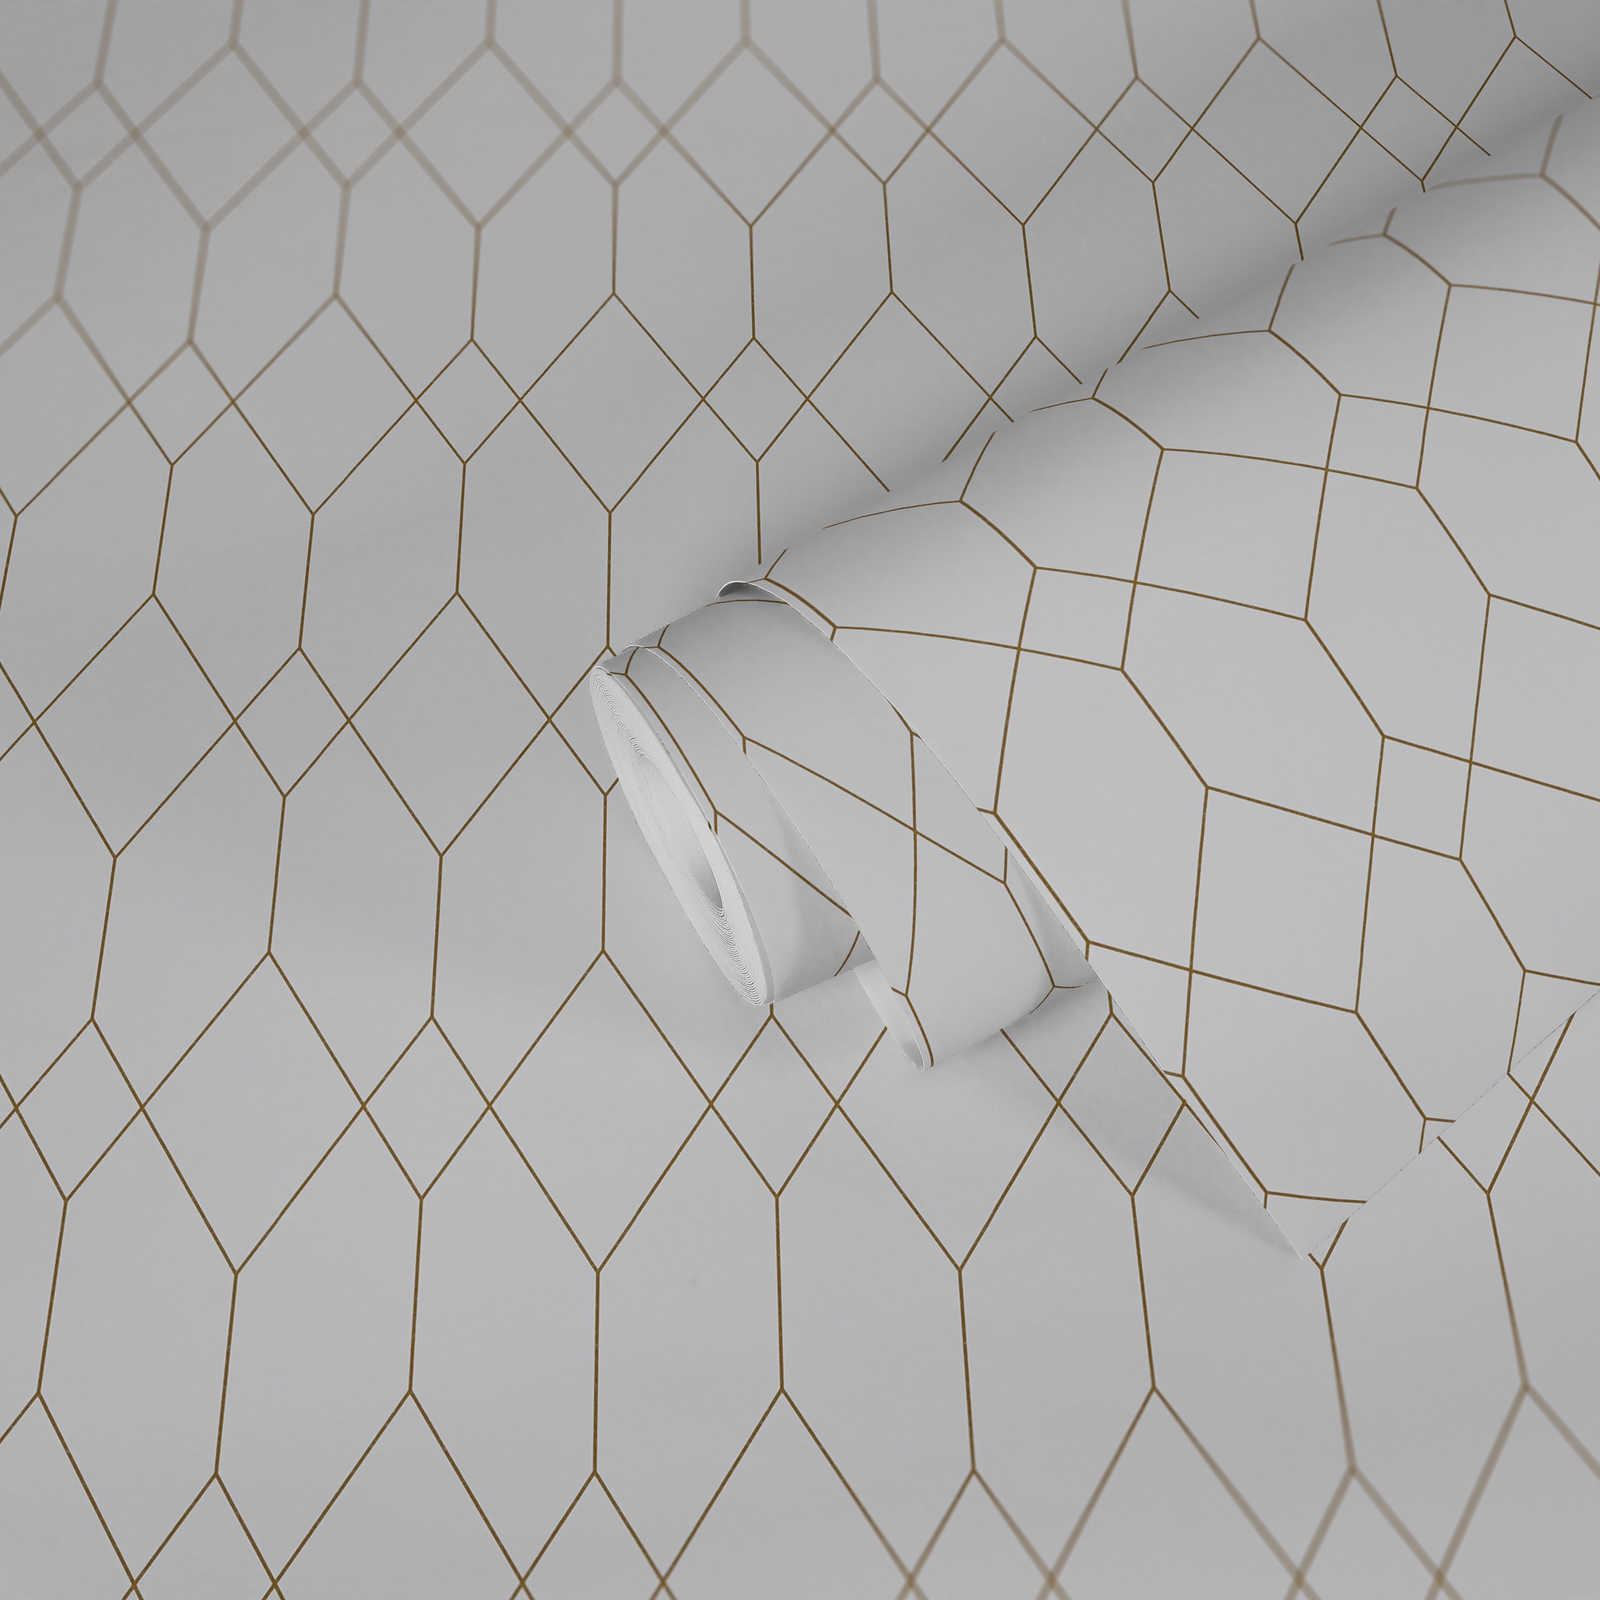             Self-adhesive wallpaper | Geometric line pattern in gold - white, metallic
        